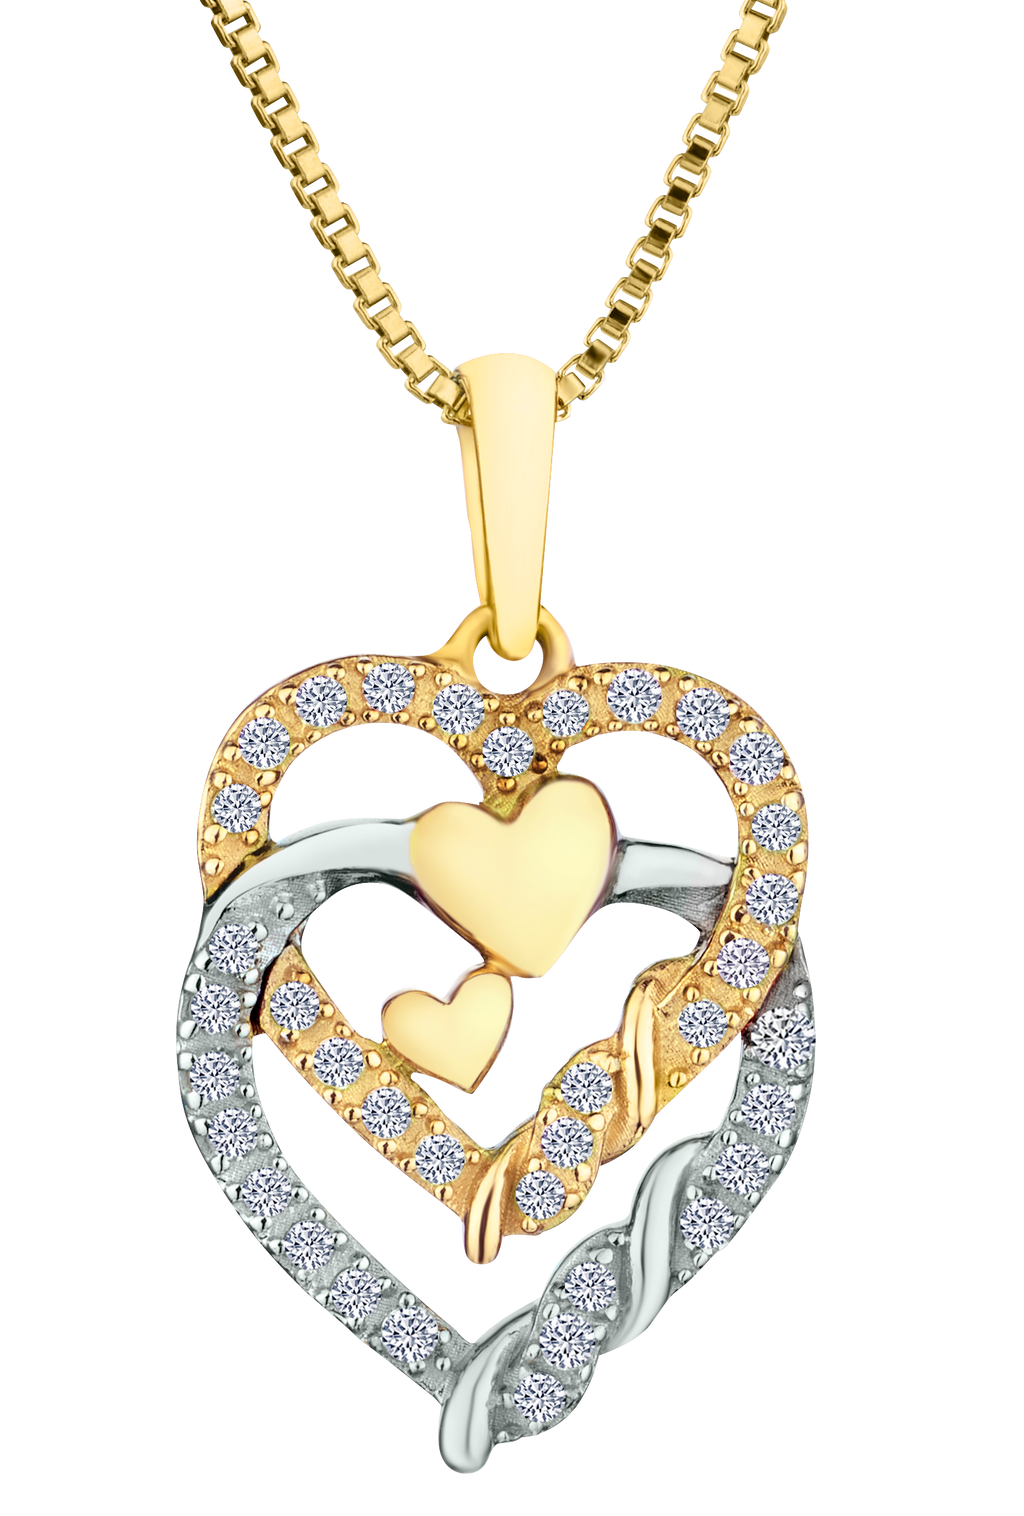 .12 Carat of Diamonds "Double Hearts" Pendant, Silver.....................NOW